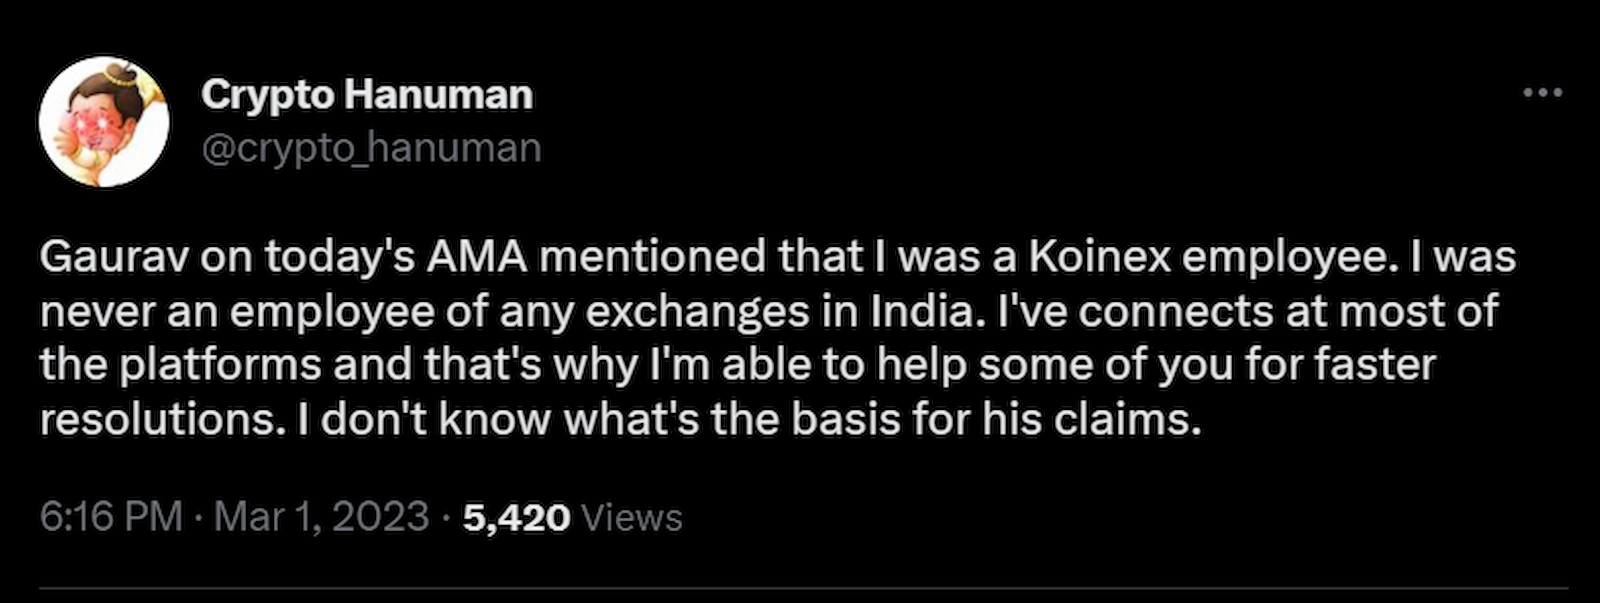 Crypto Hanuman claimed he has never been a Koinex employee.